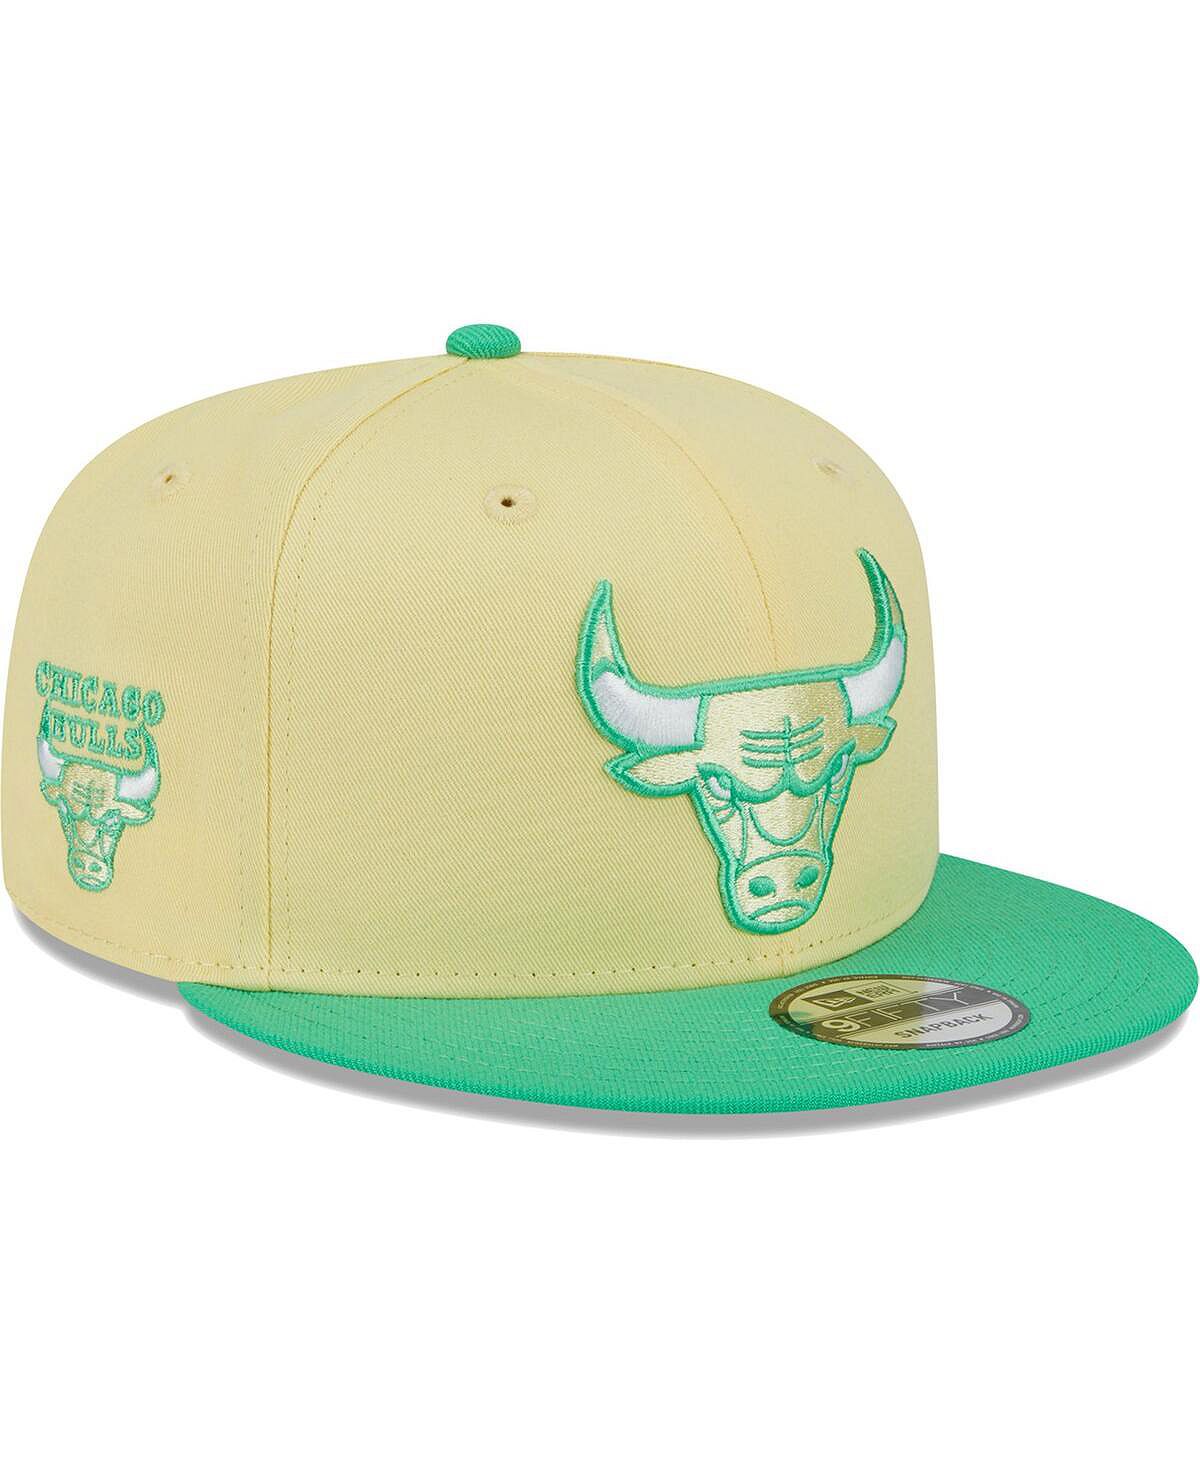 Мужская желто-зеленая кепка Chicago Bulls 9FIFTY New Era